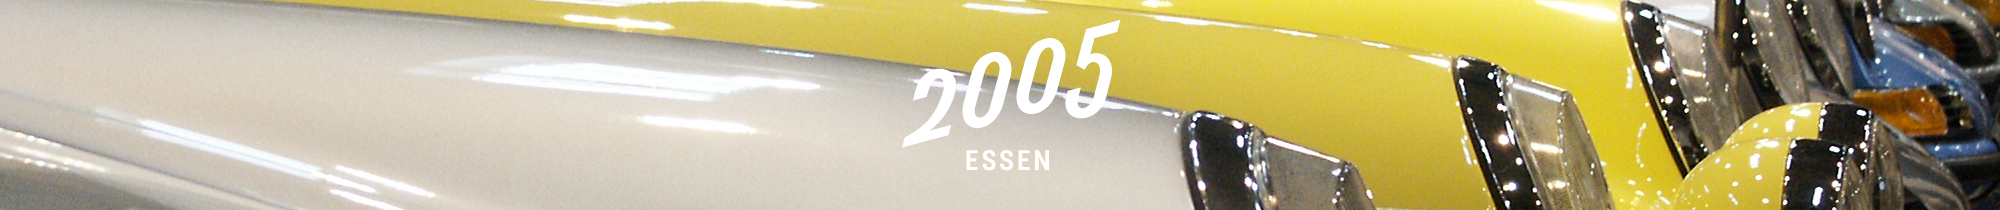 2005-essen-slidi-01